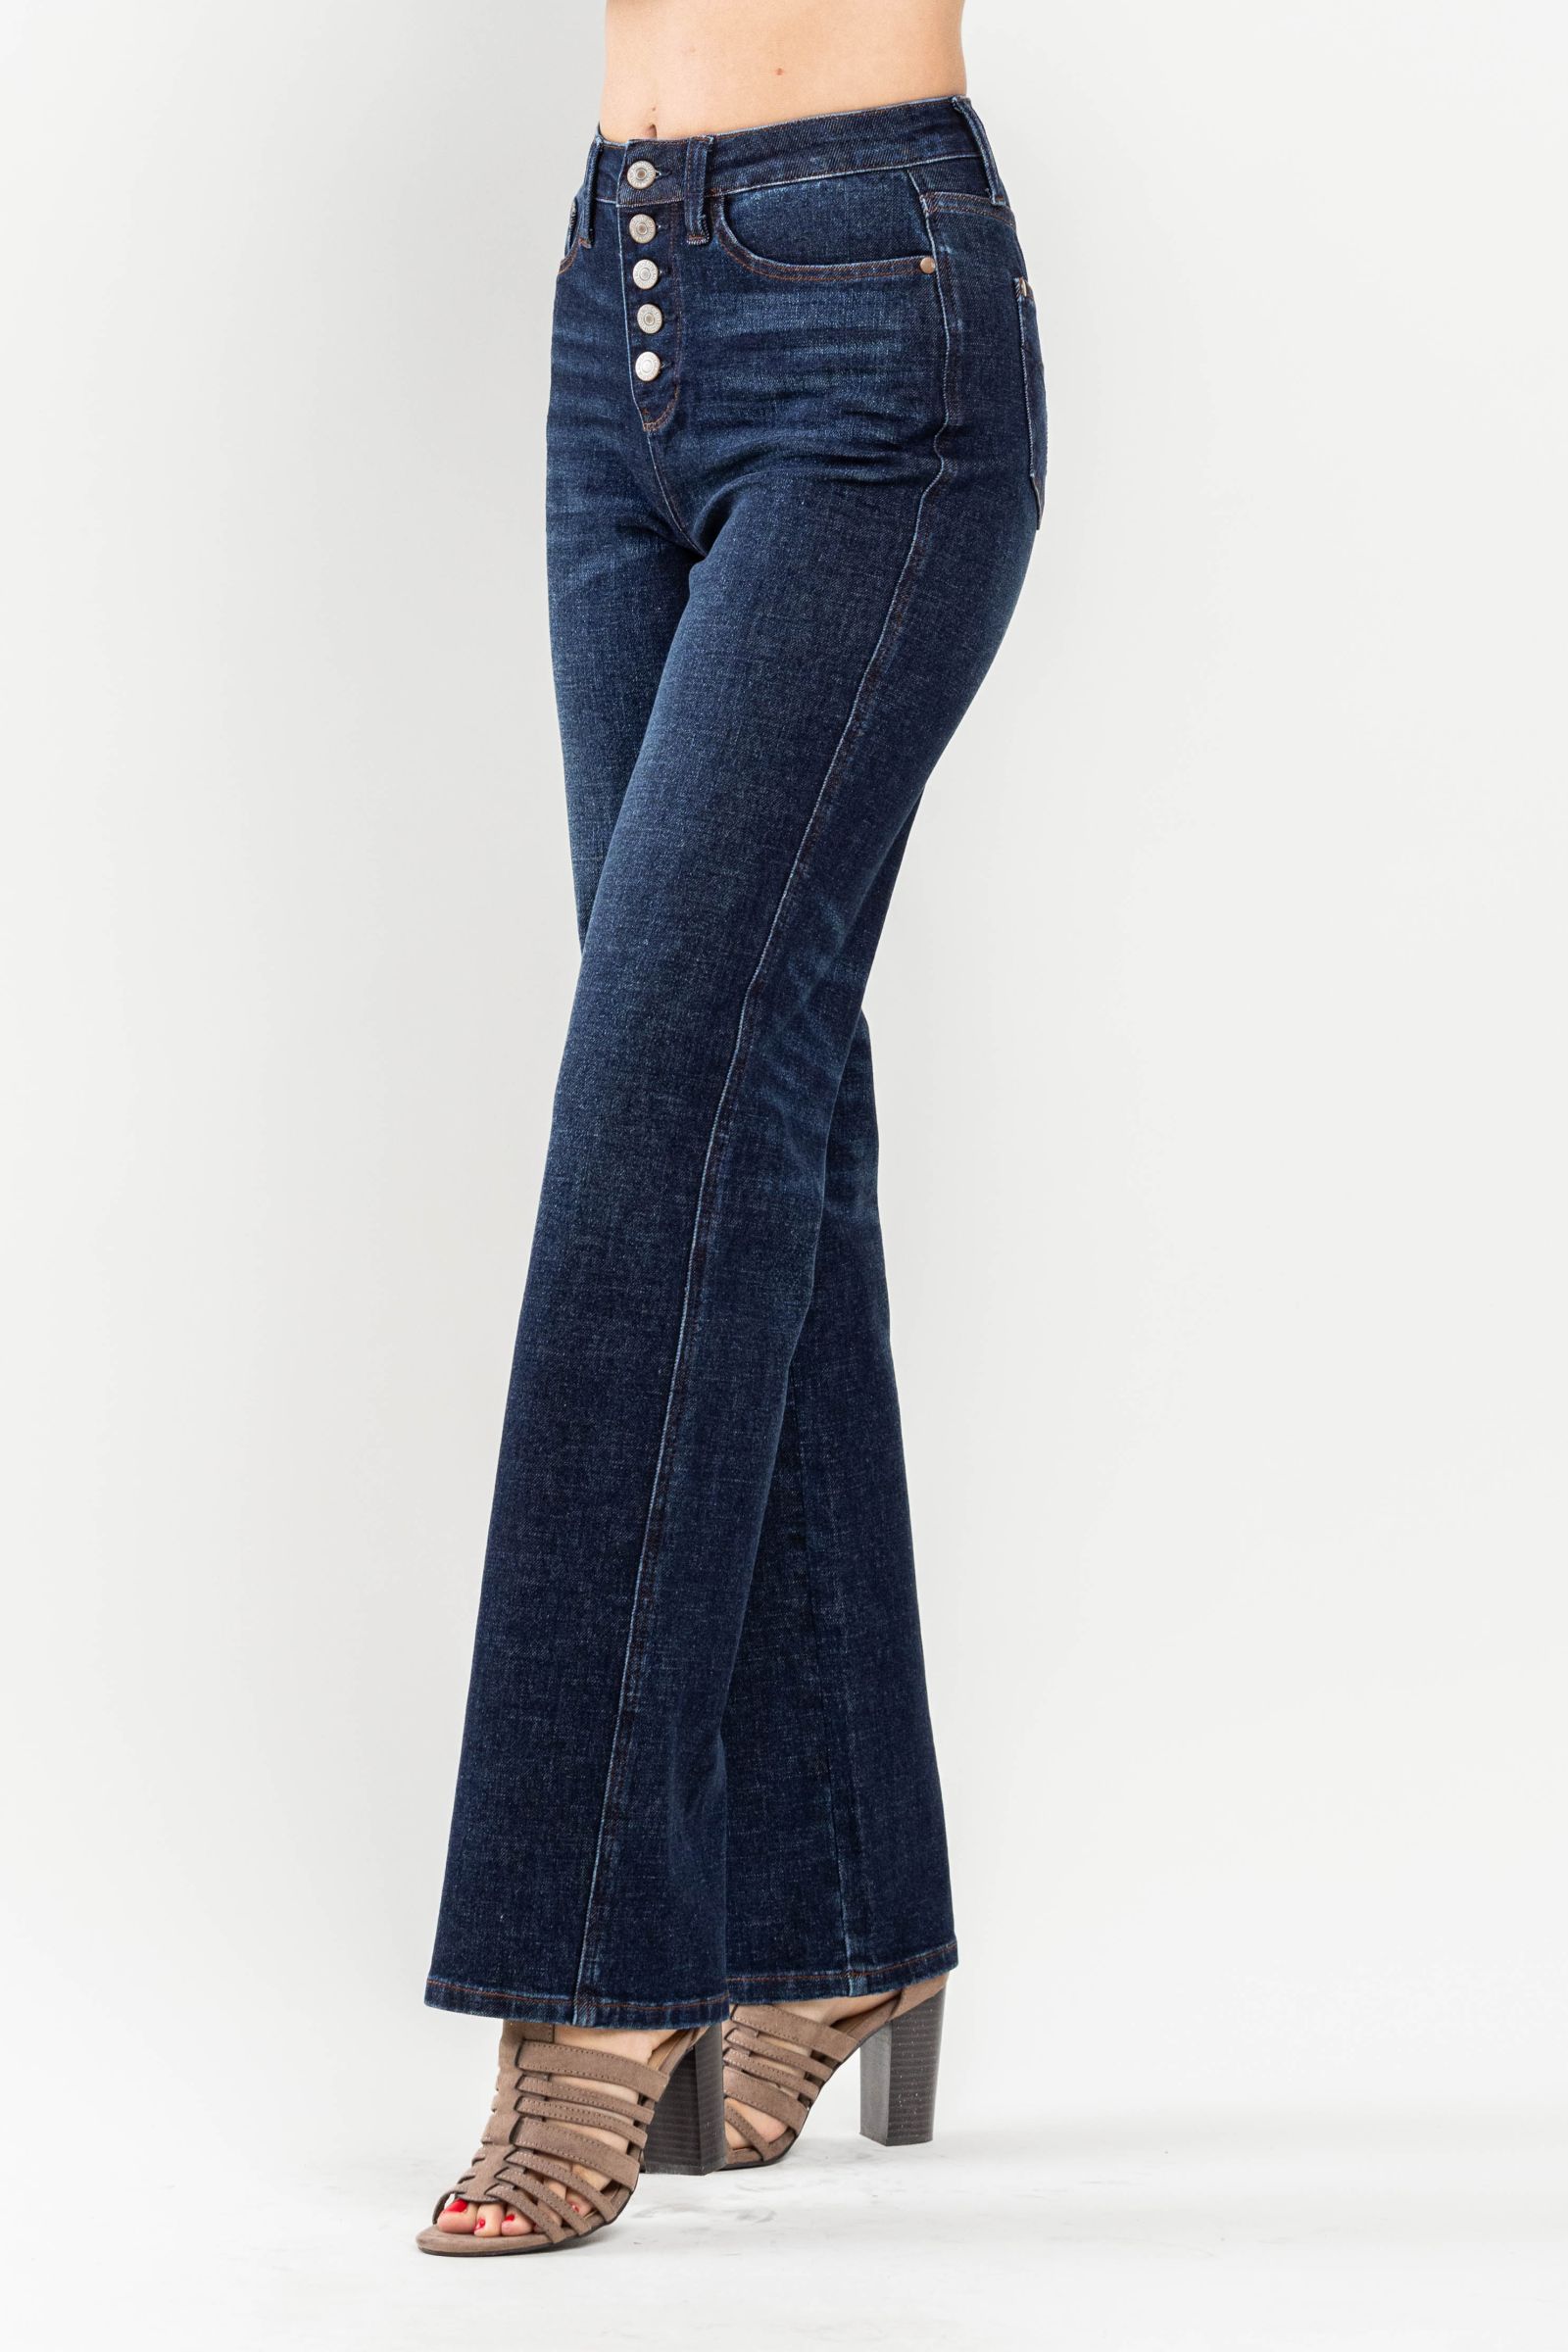 Judy Blue Jeans 88598